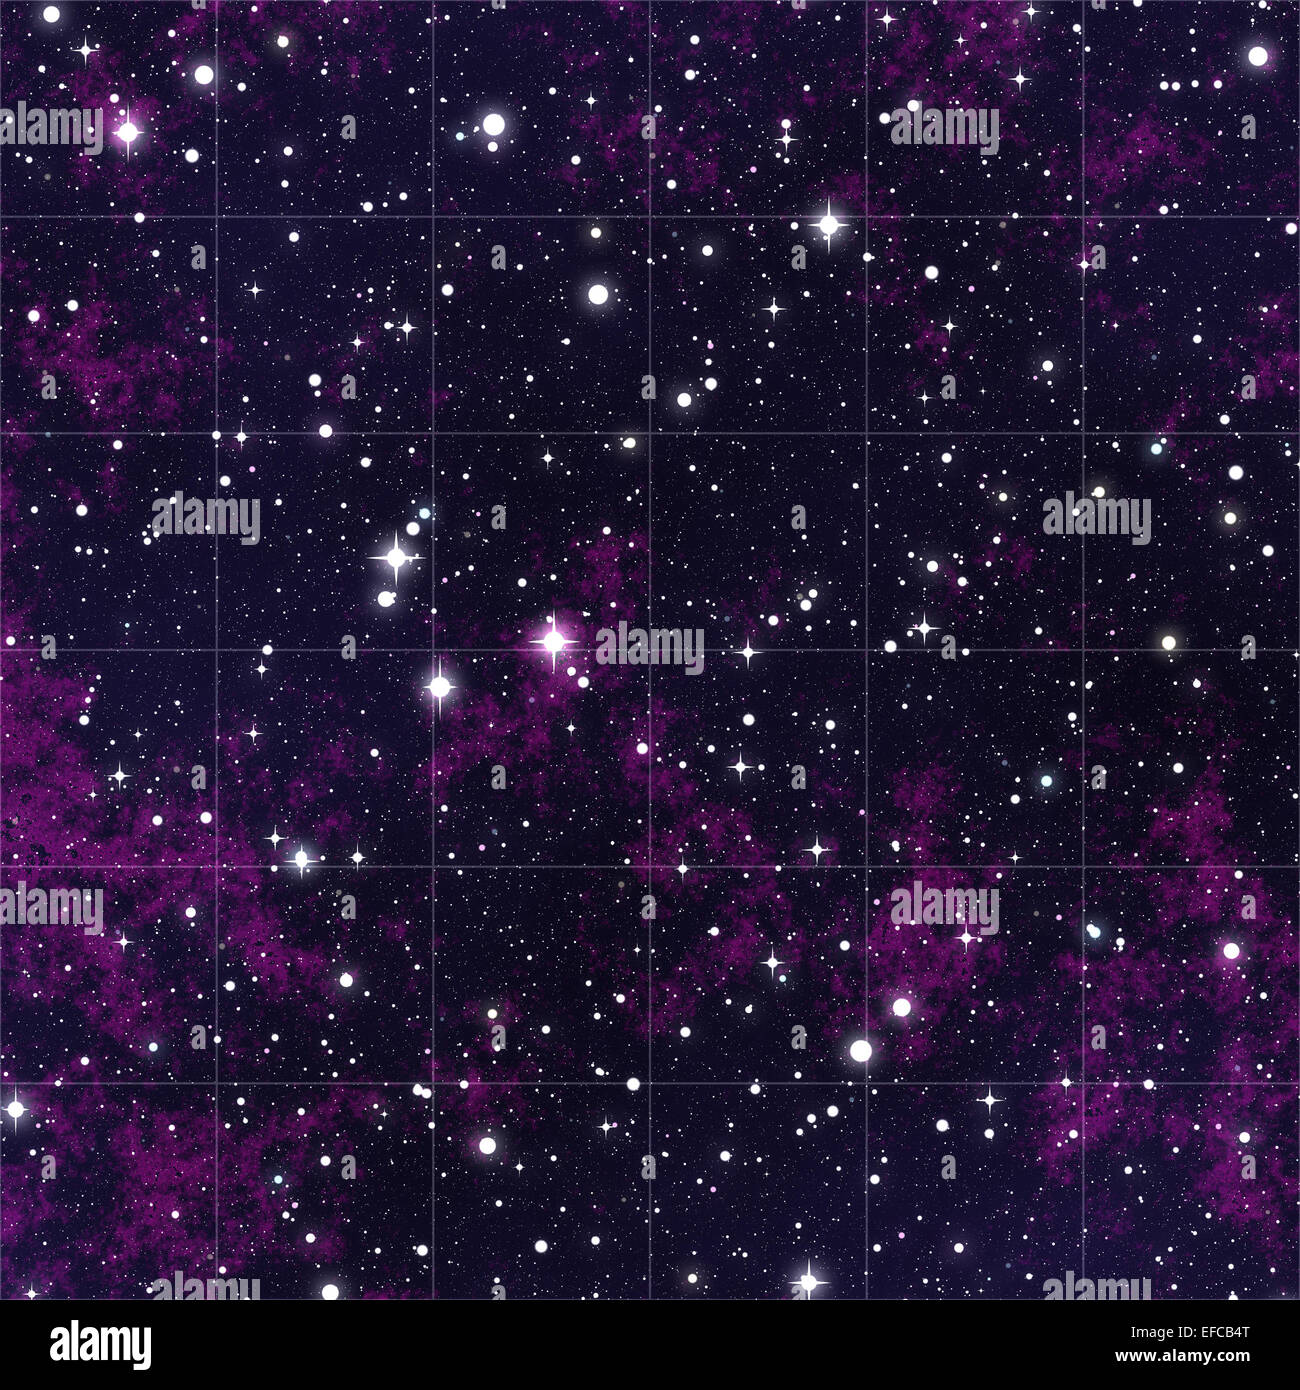 Millions of stars seen in the purple night sky Stock Photo